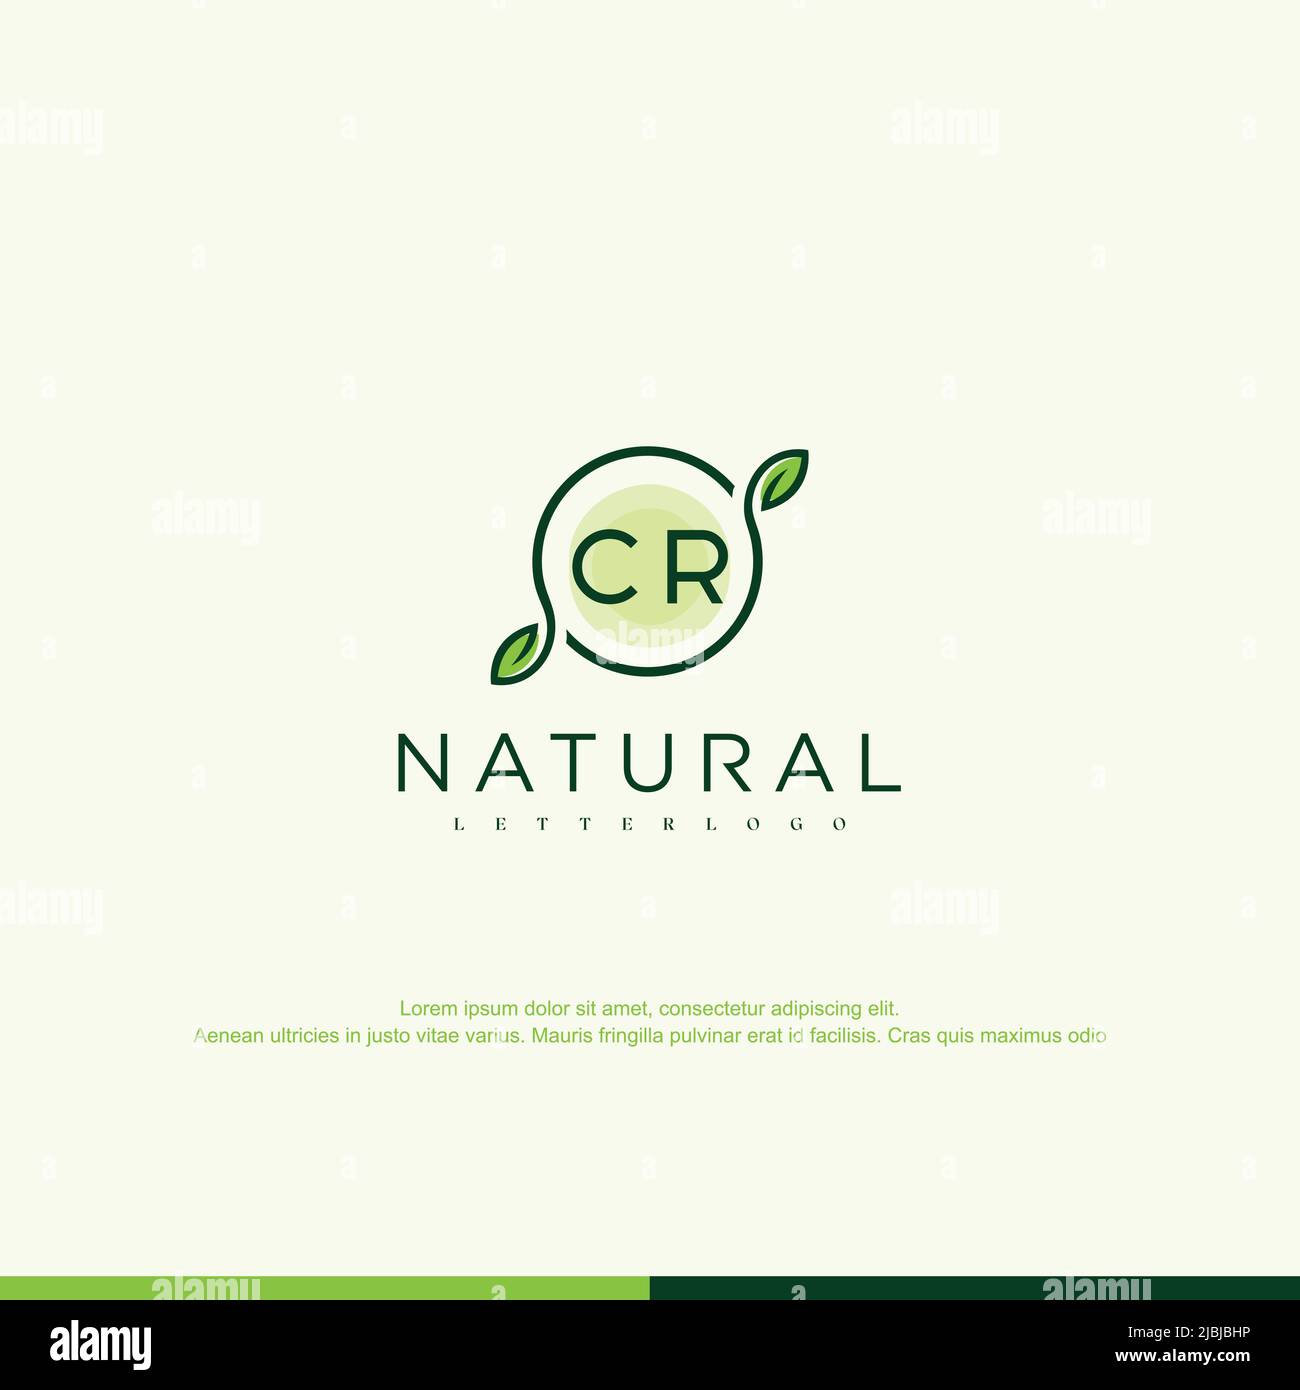 CR Initial natural logo template vector Stock Vector